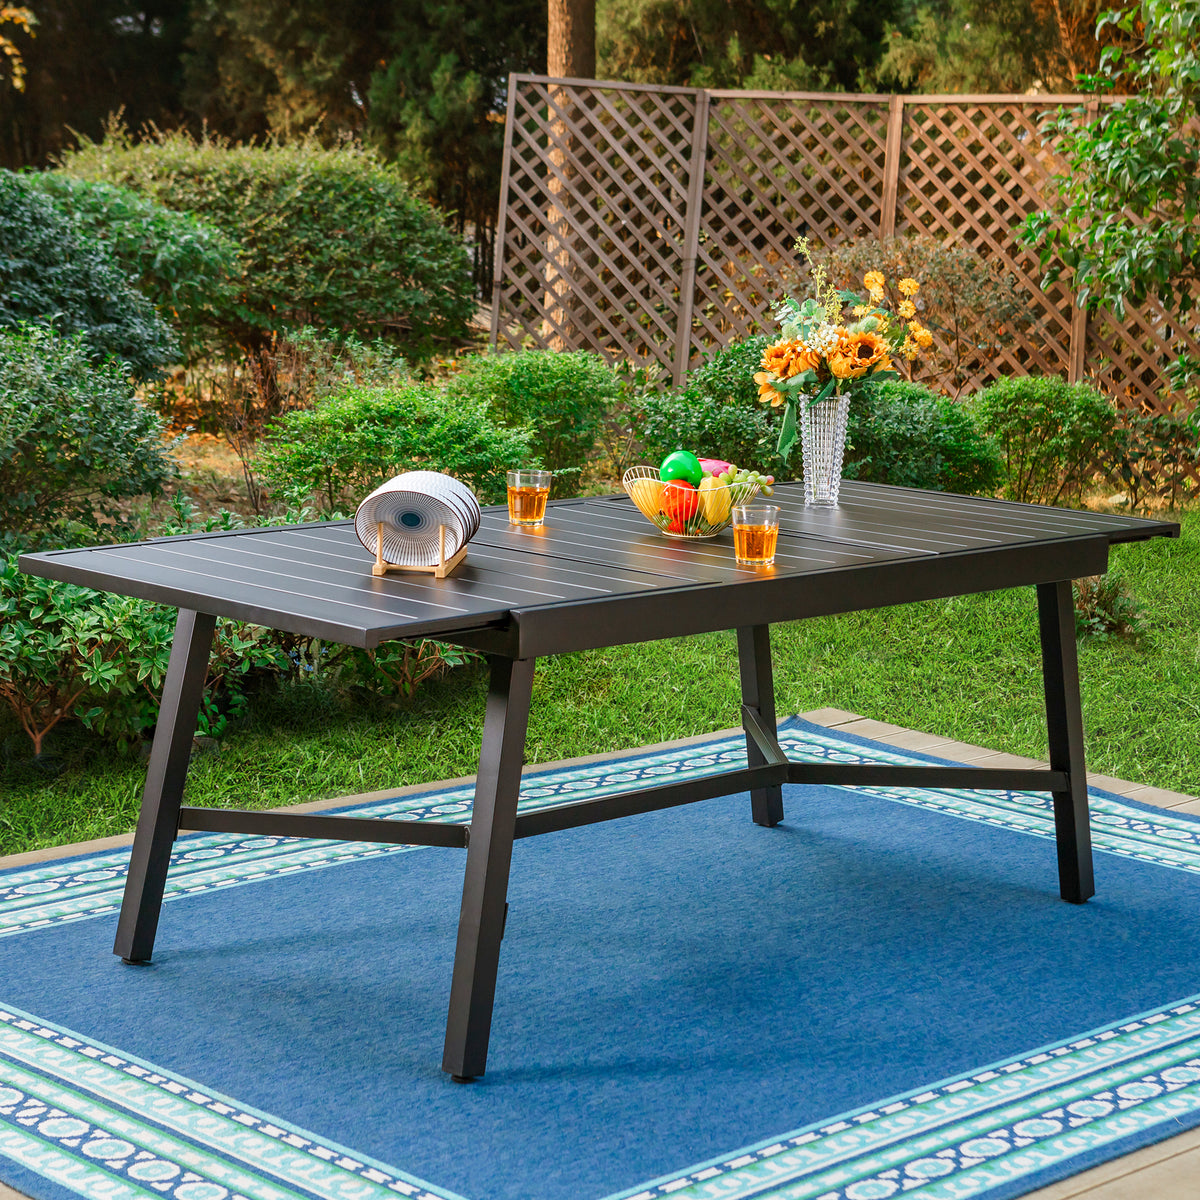 PHI VILLA Metal Adjustable Outdoor Patio Dining Table for 6-8 Person